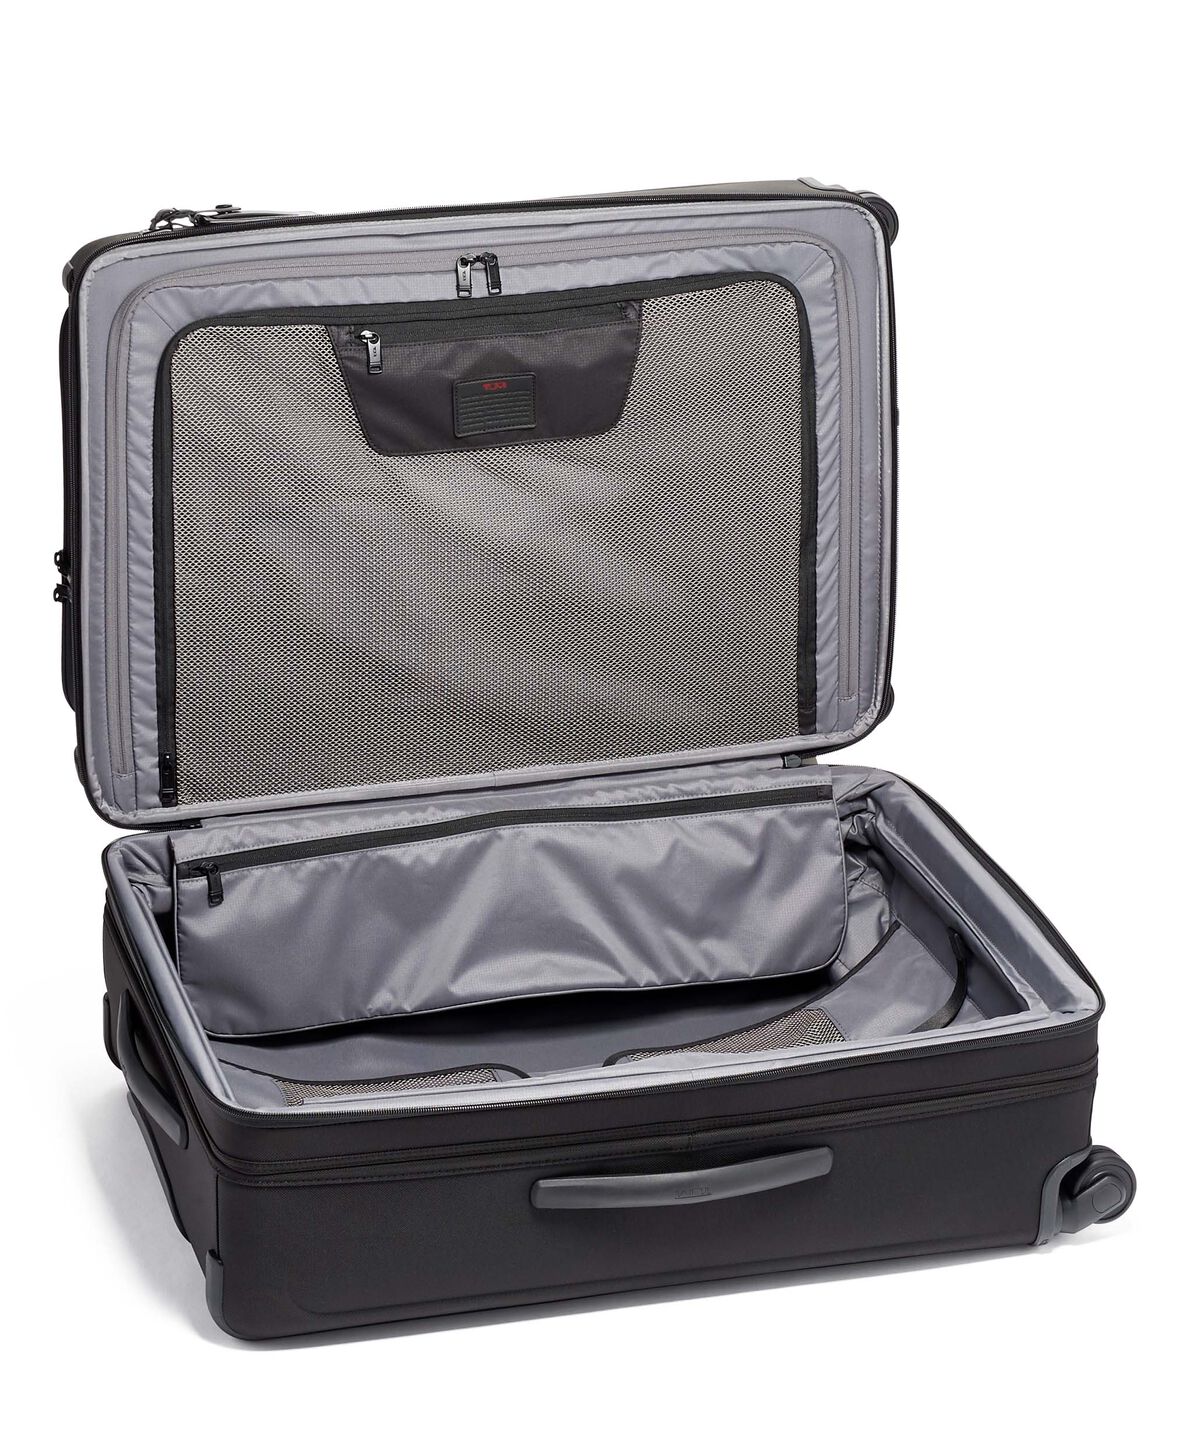 Alpha 3 Medium Trip Expandable Checked Luggage 73,5 cm | TUMI UK